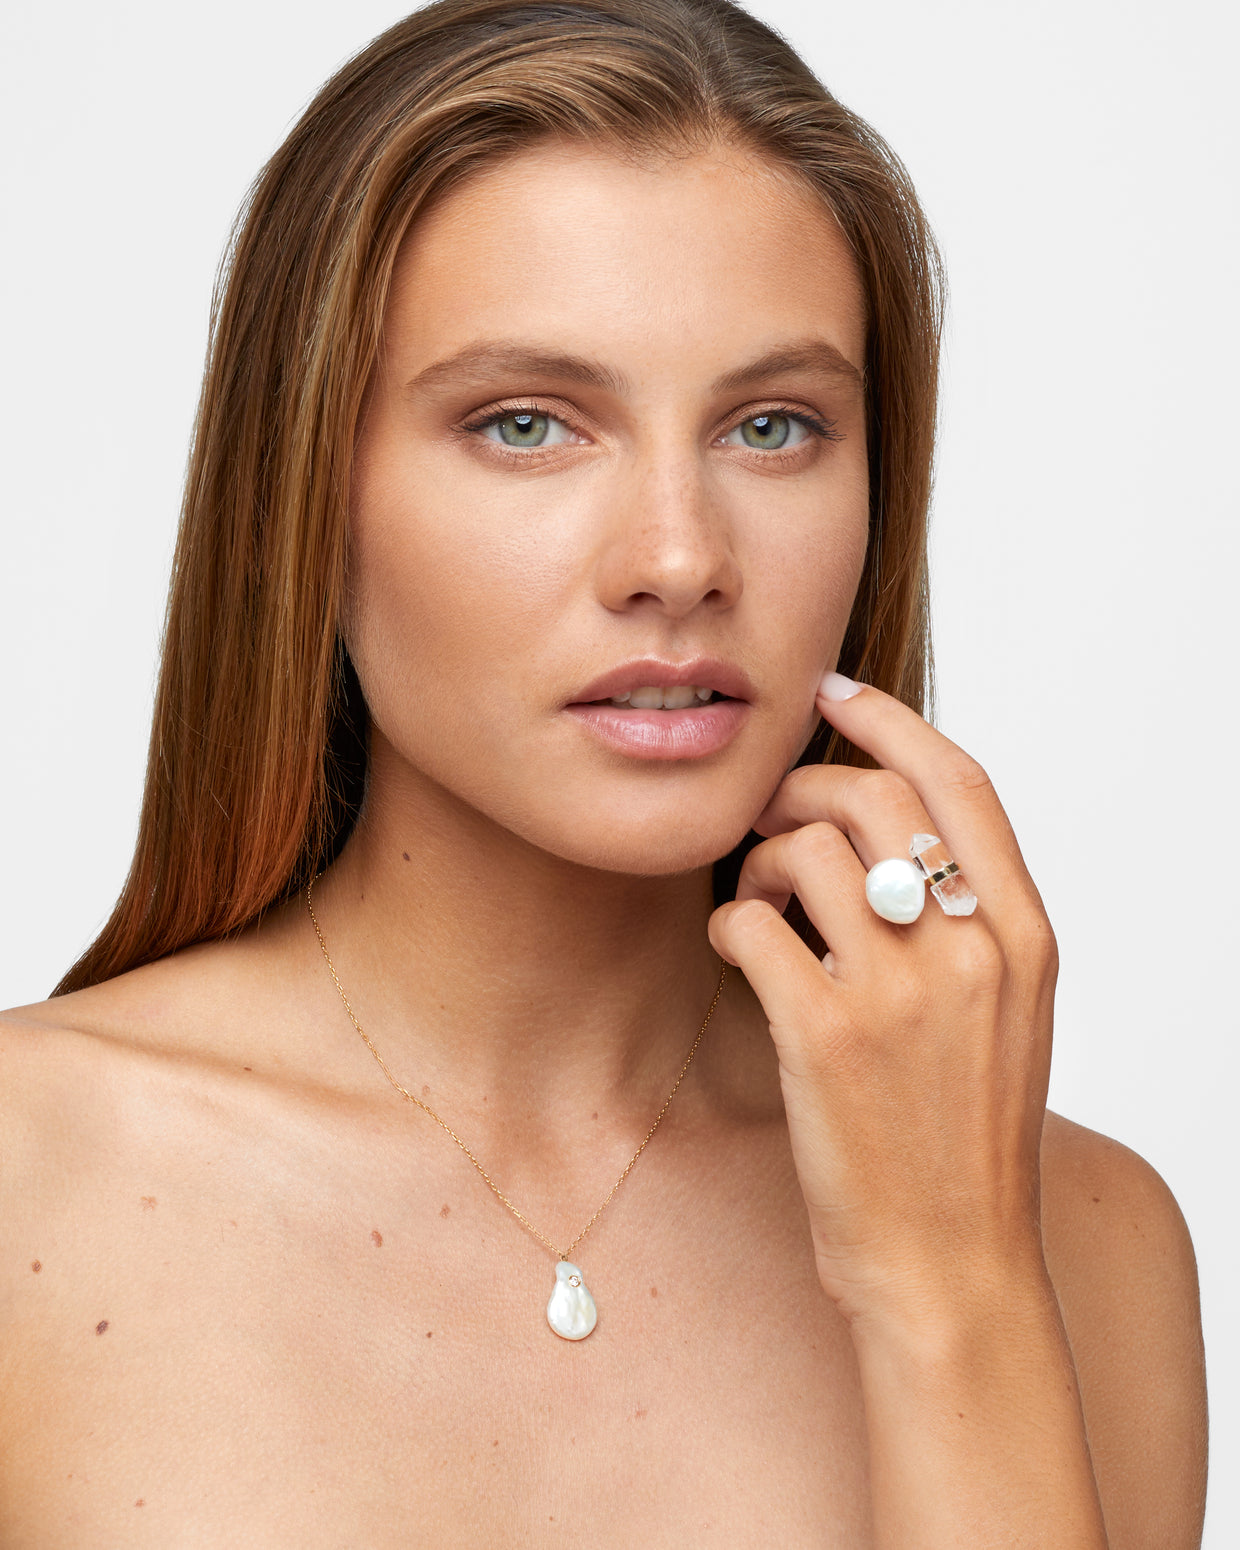 Ocean Diamond Bezel Pearl Necklace